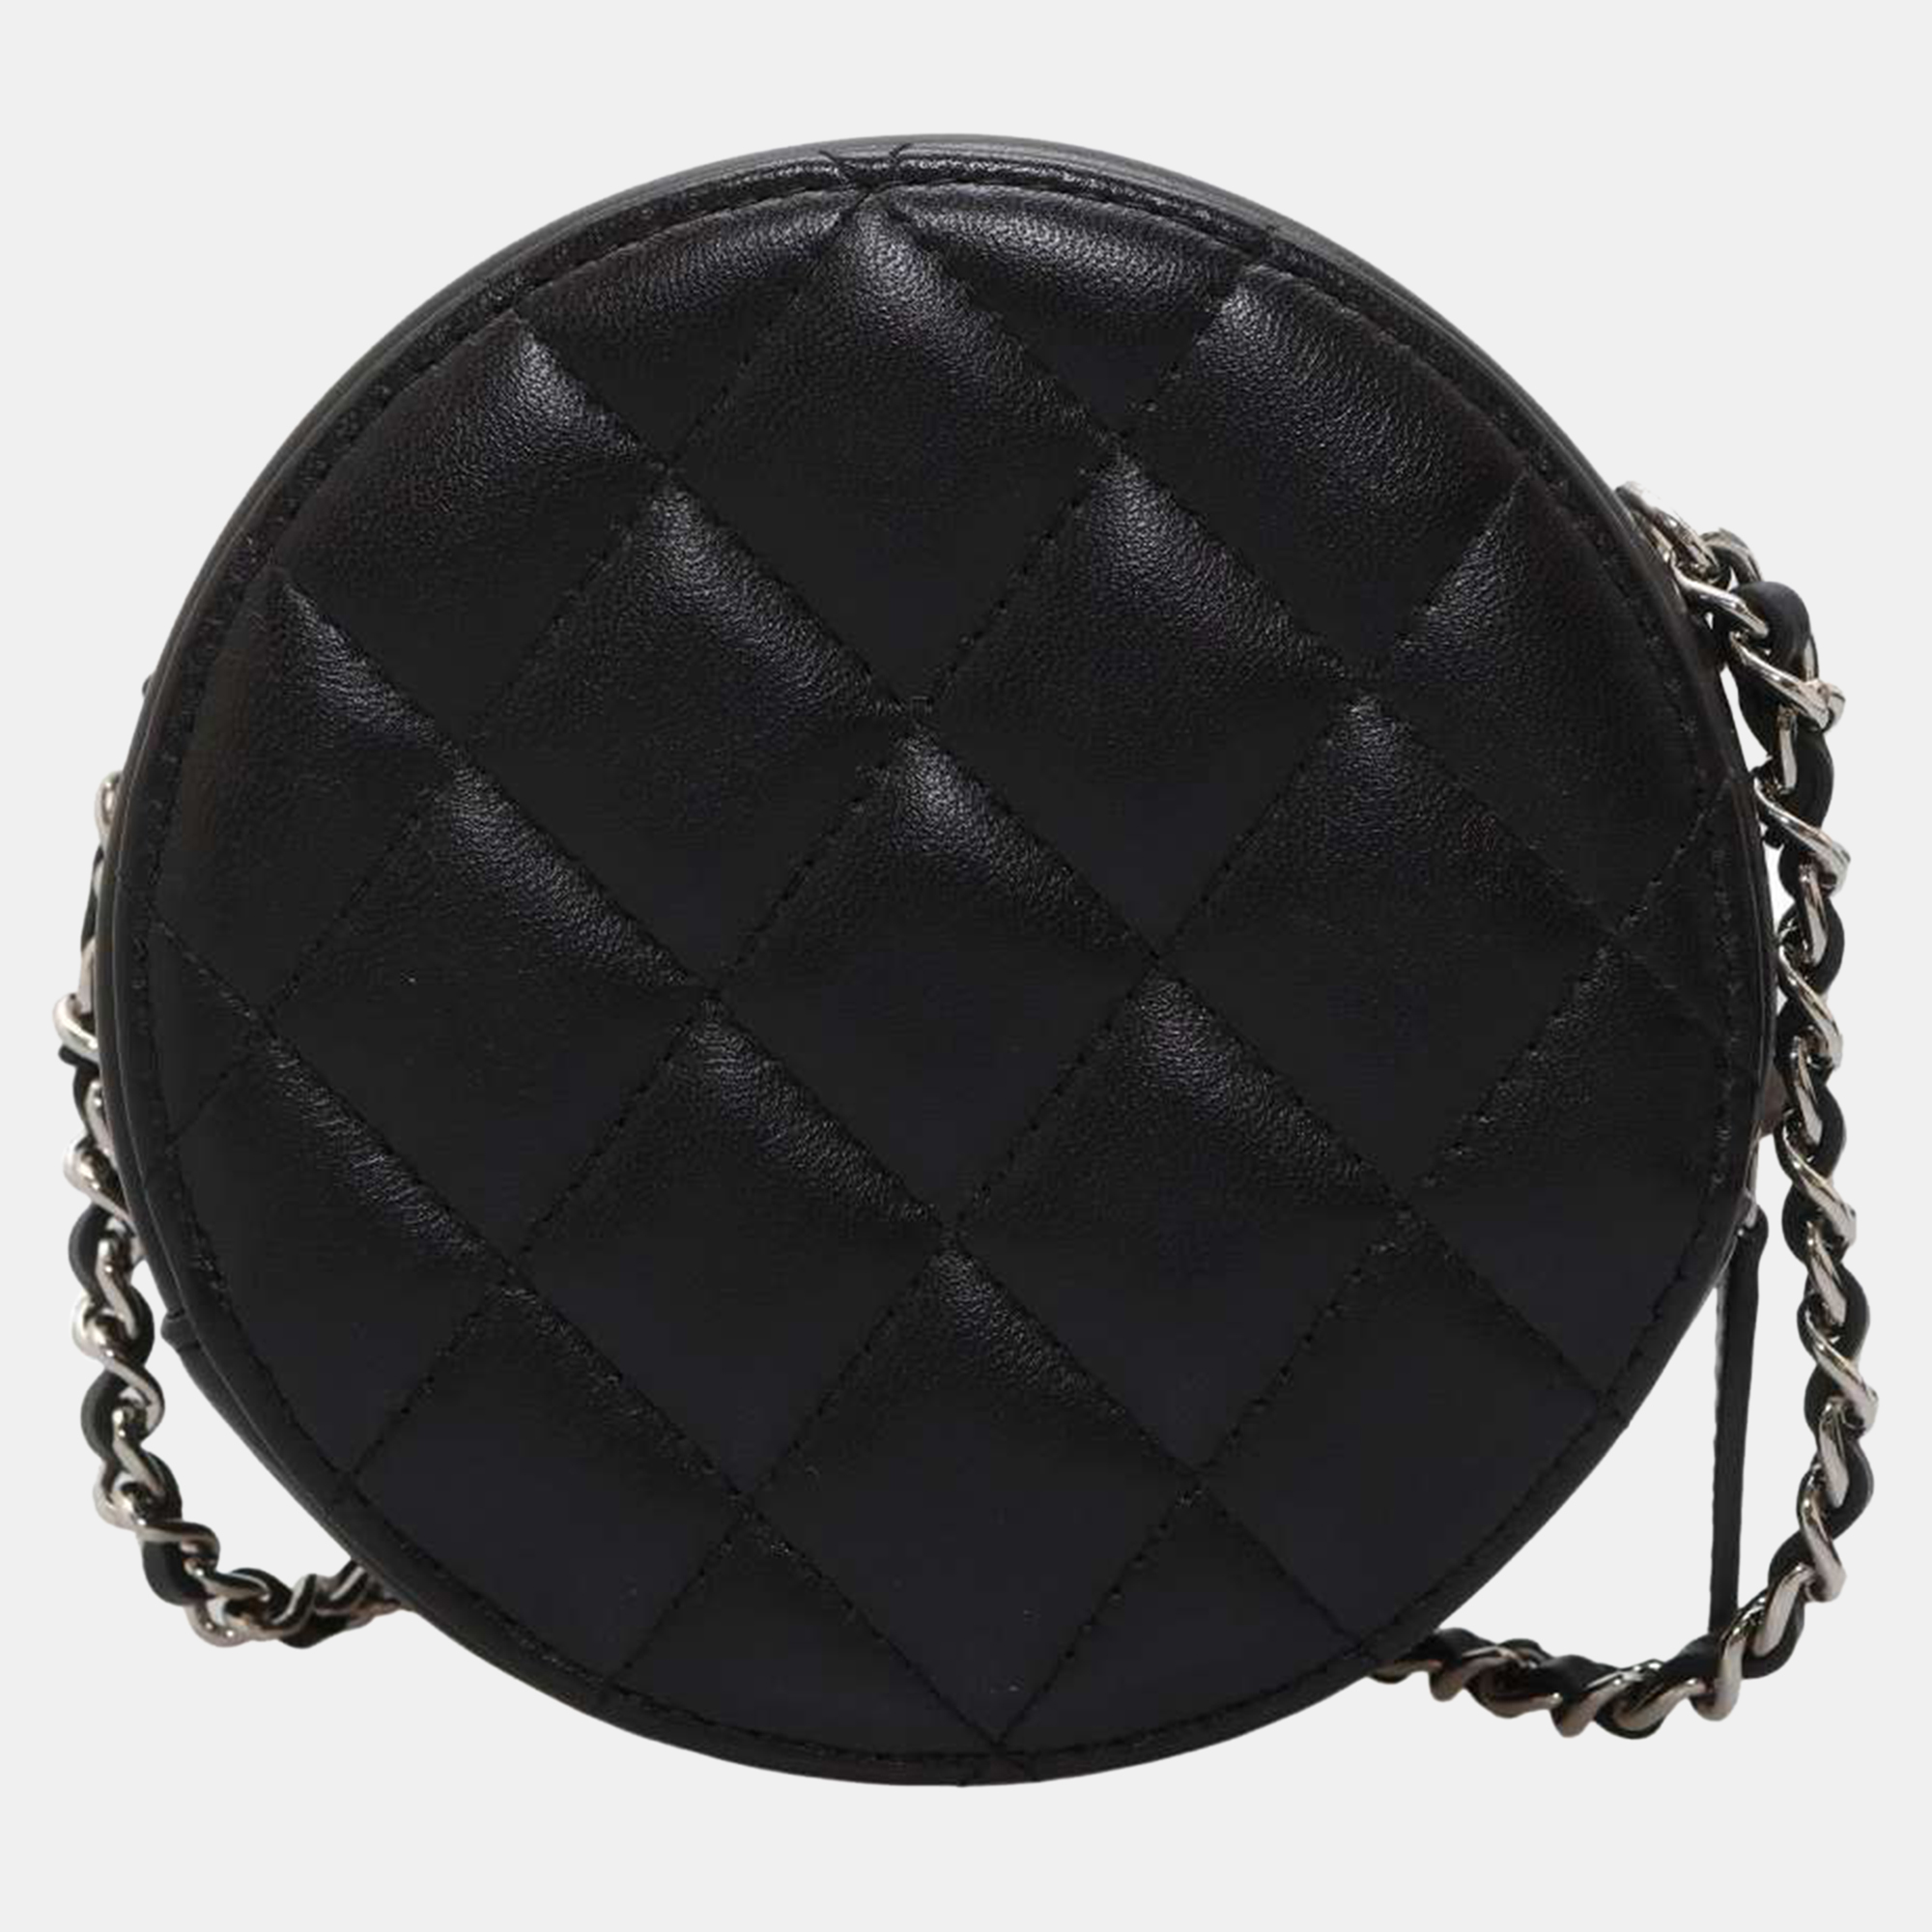 CHANEL Black Caviar Leather Round Clutch W/ Chain